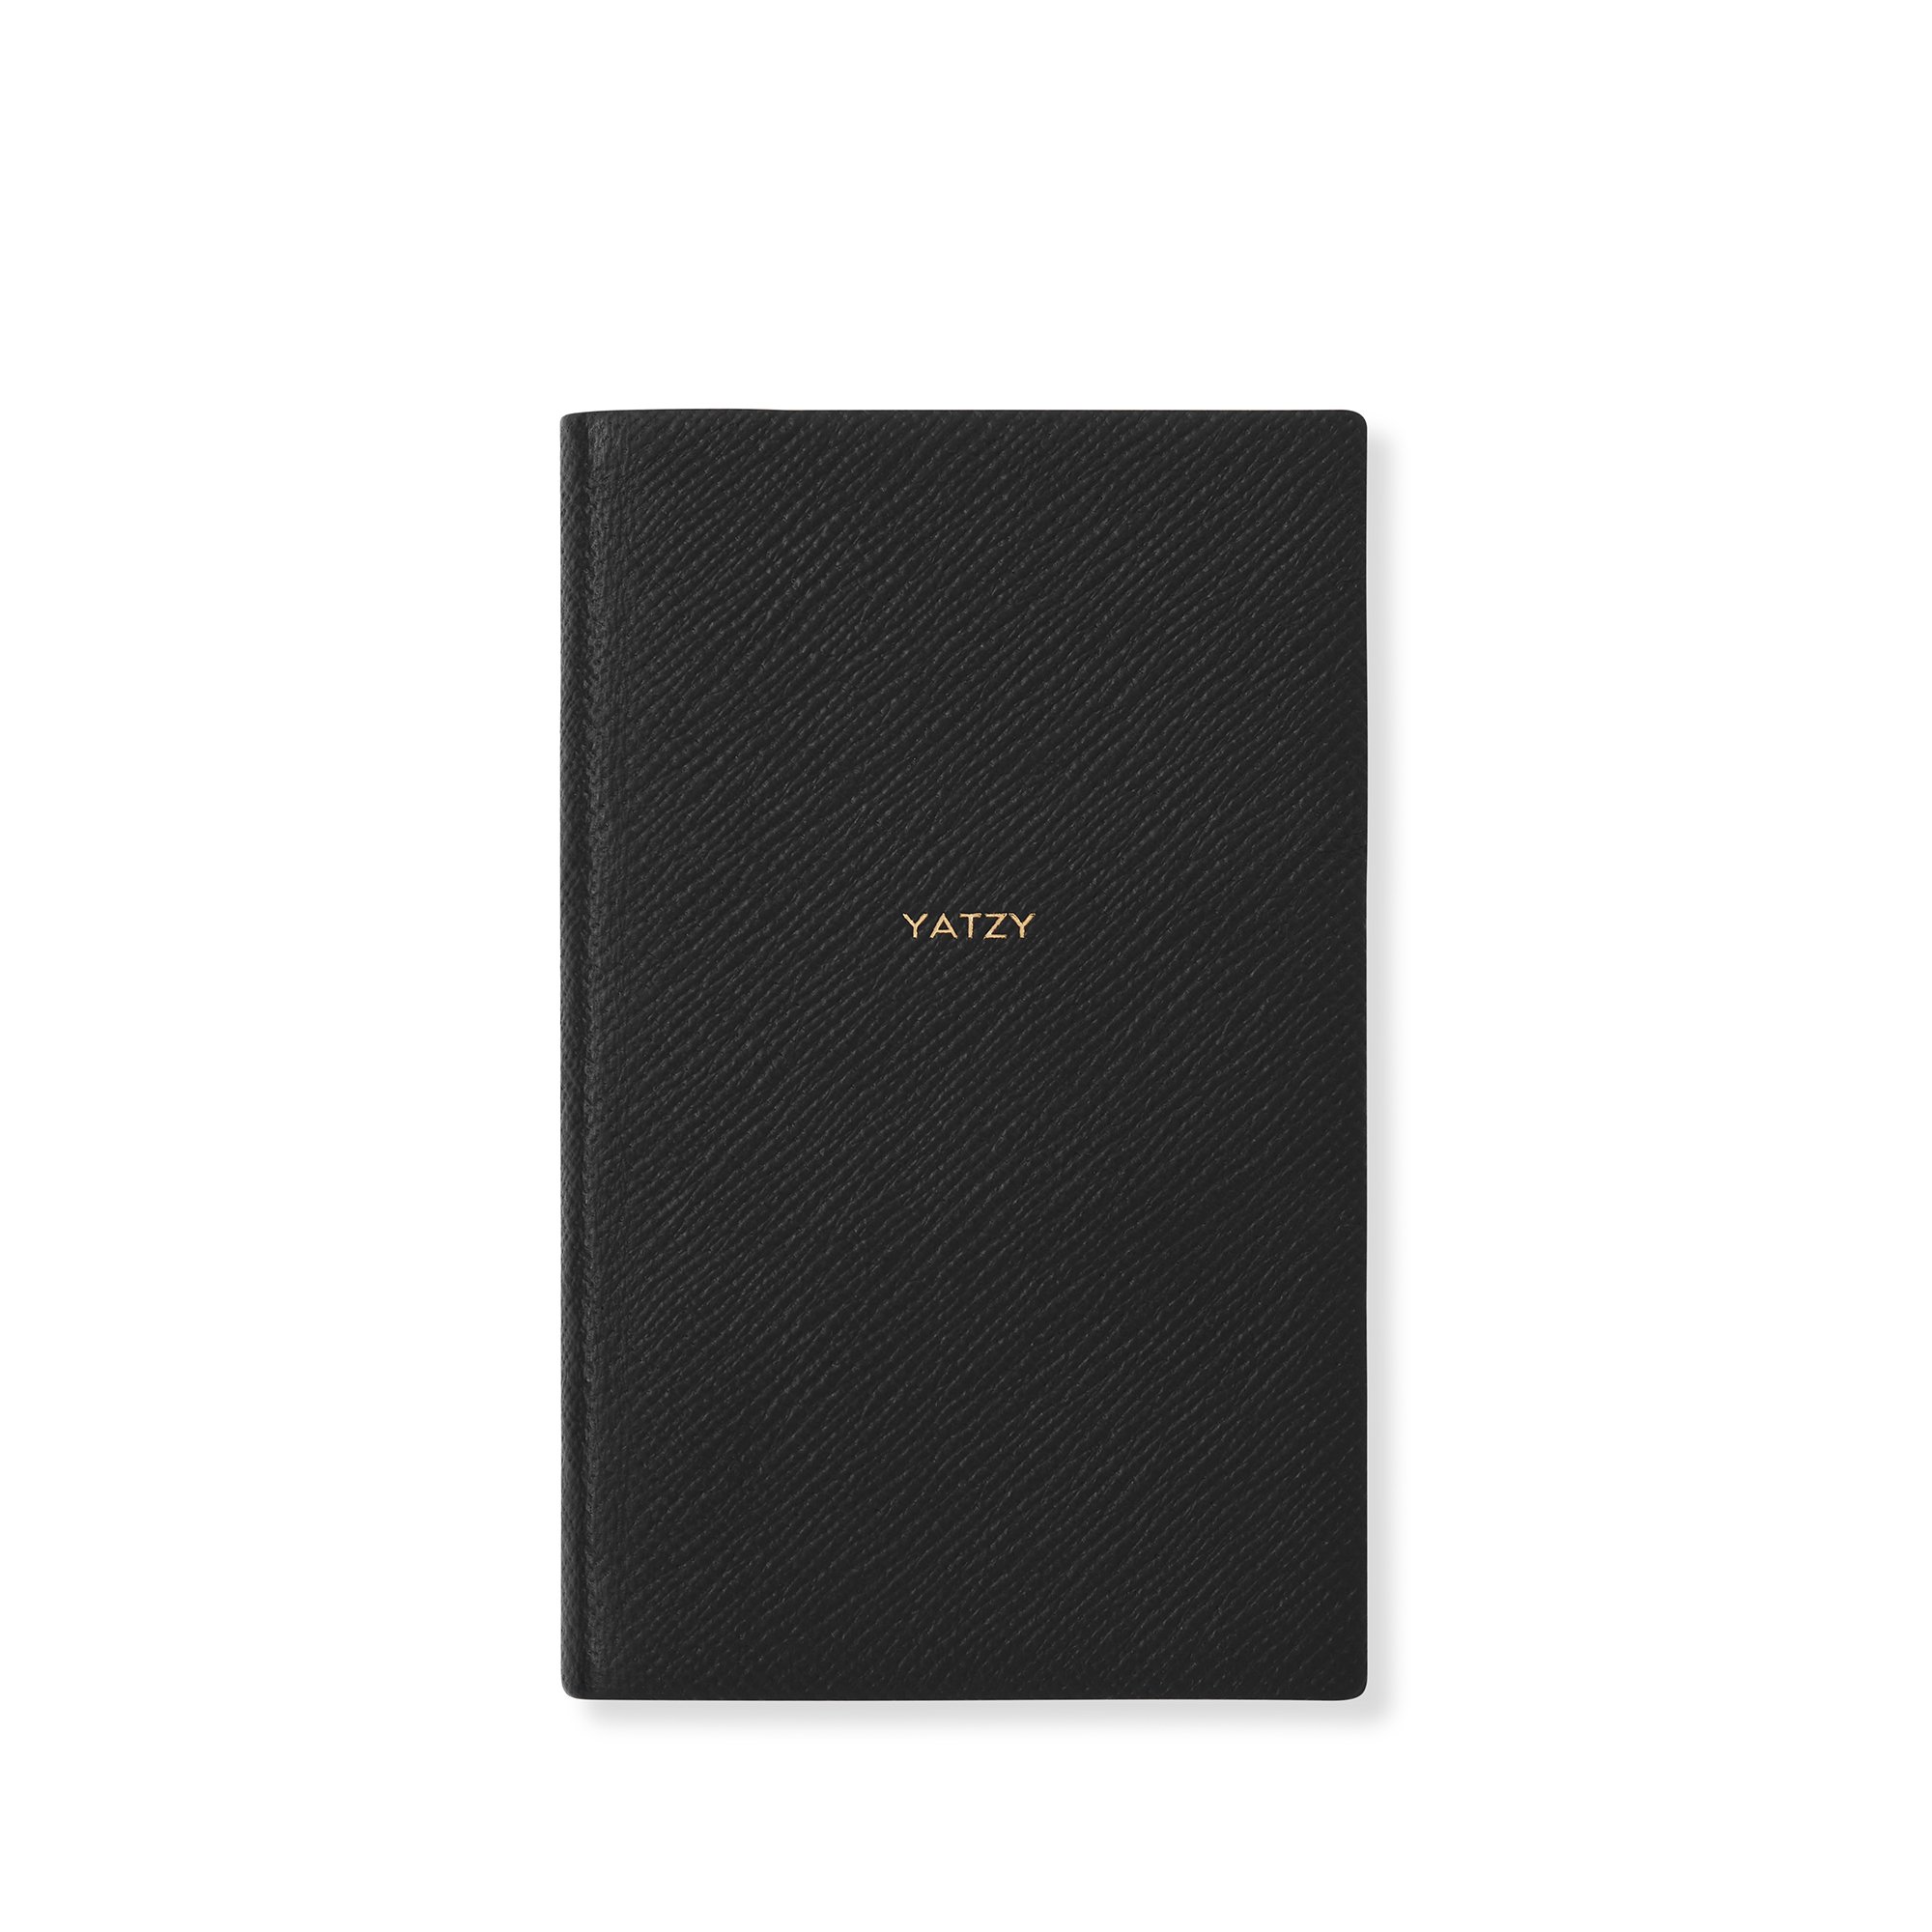 Smythson Yatzy Scorecard Panama Notebook In Black